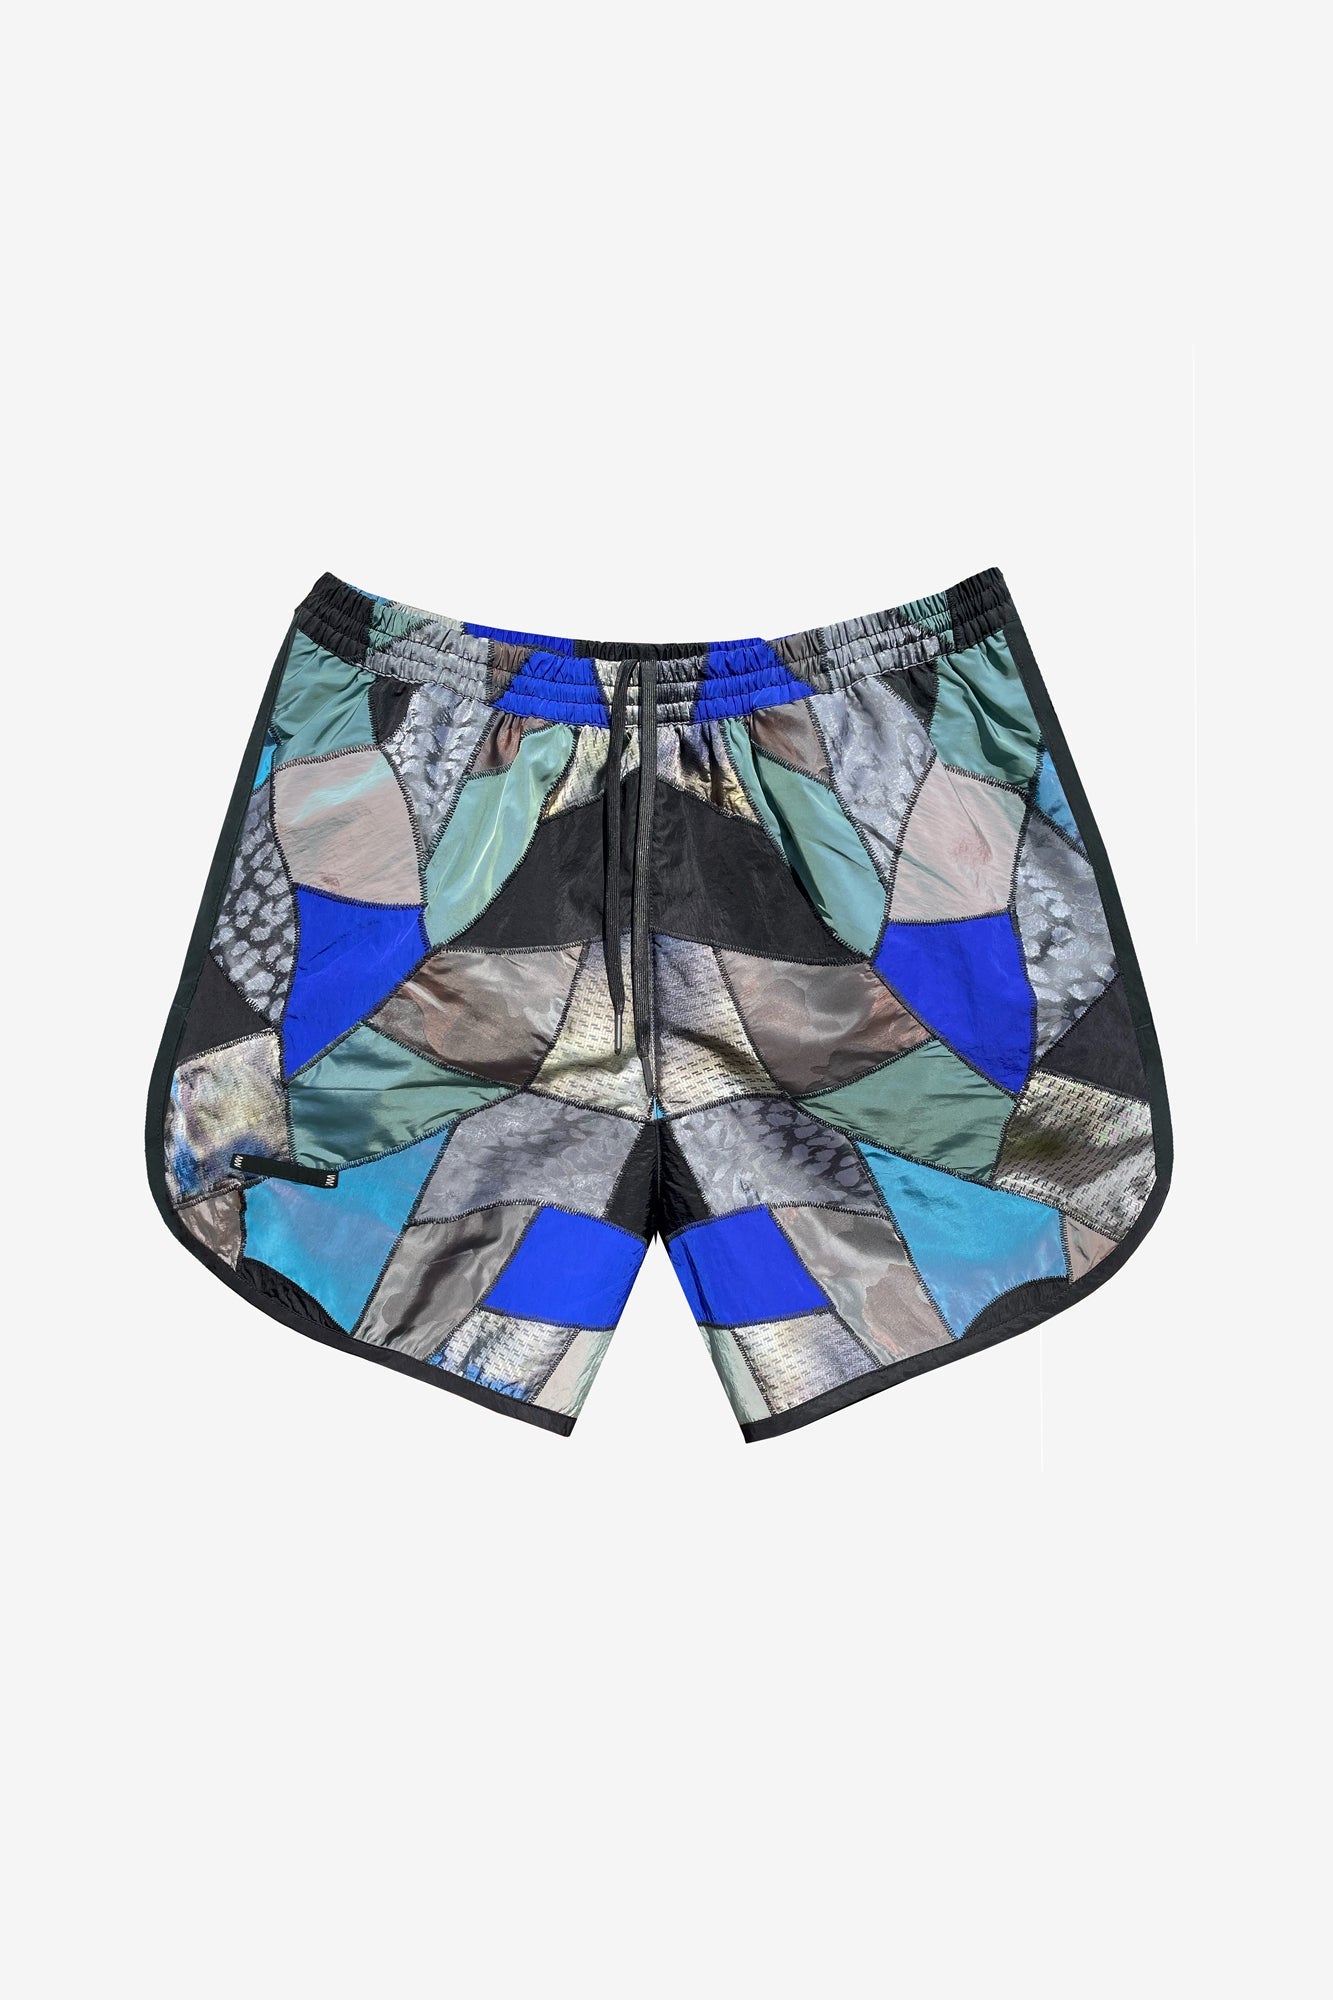 Louis Vuitton Swim Shorts Medium 32 / 34 Waist